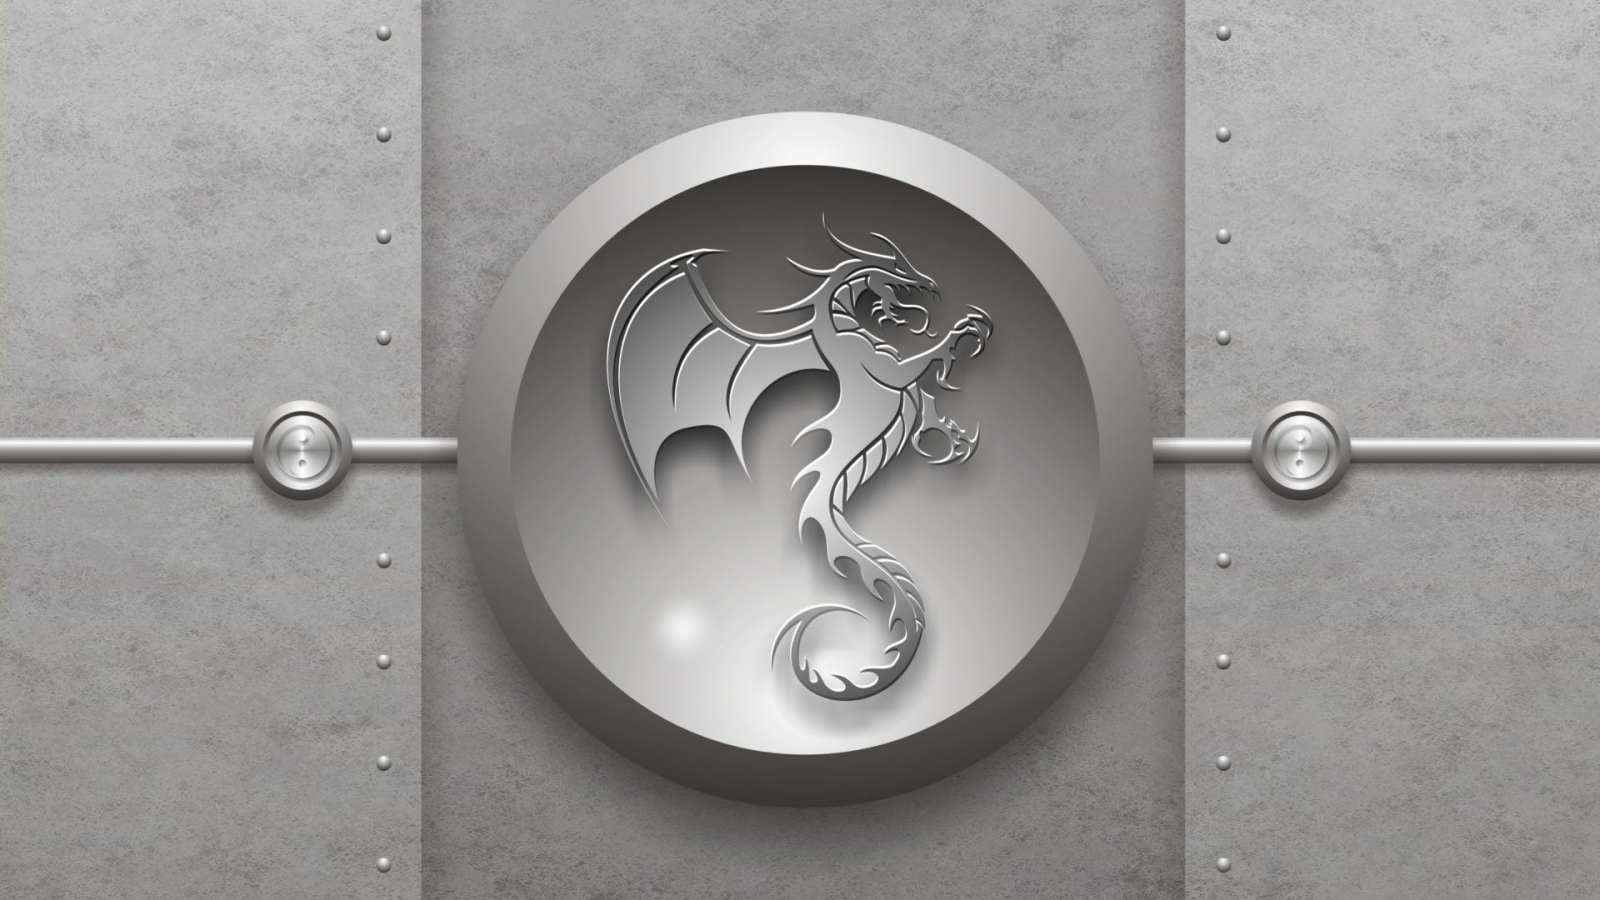 dragon, sign, grey